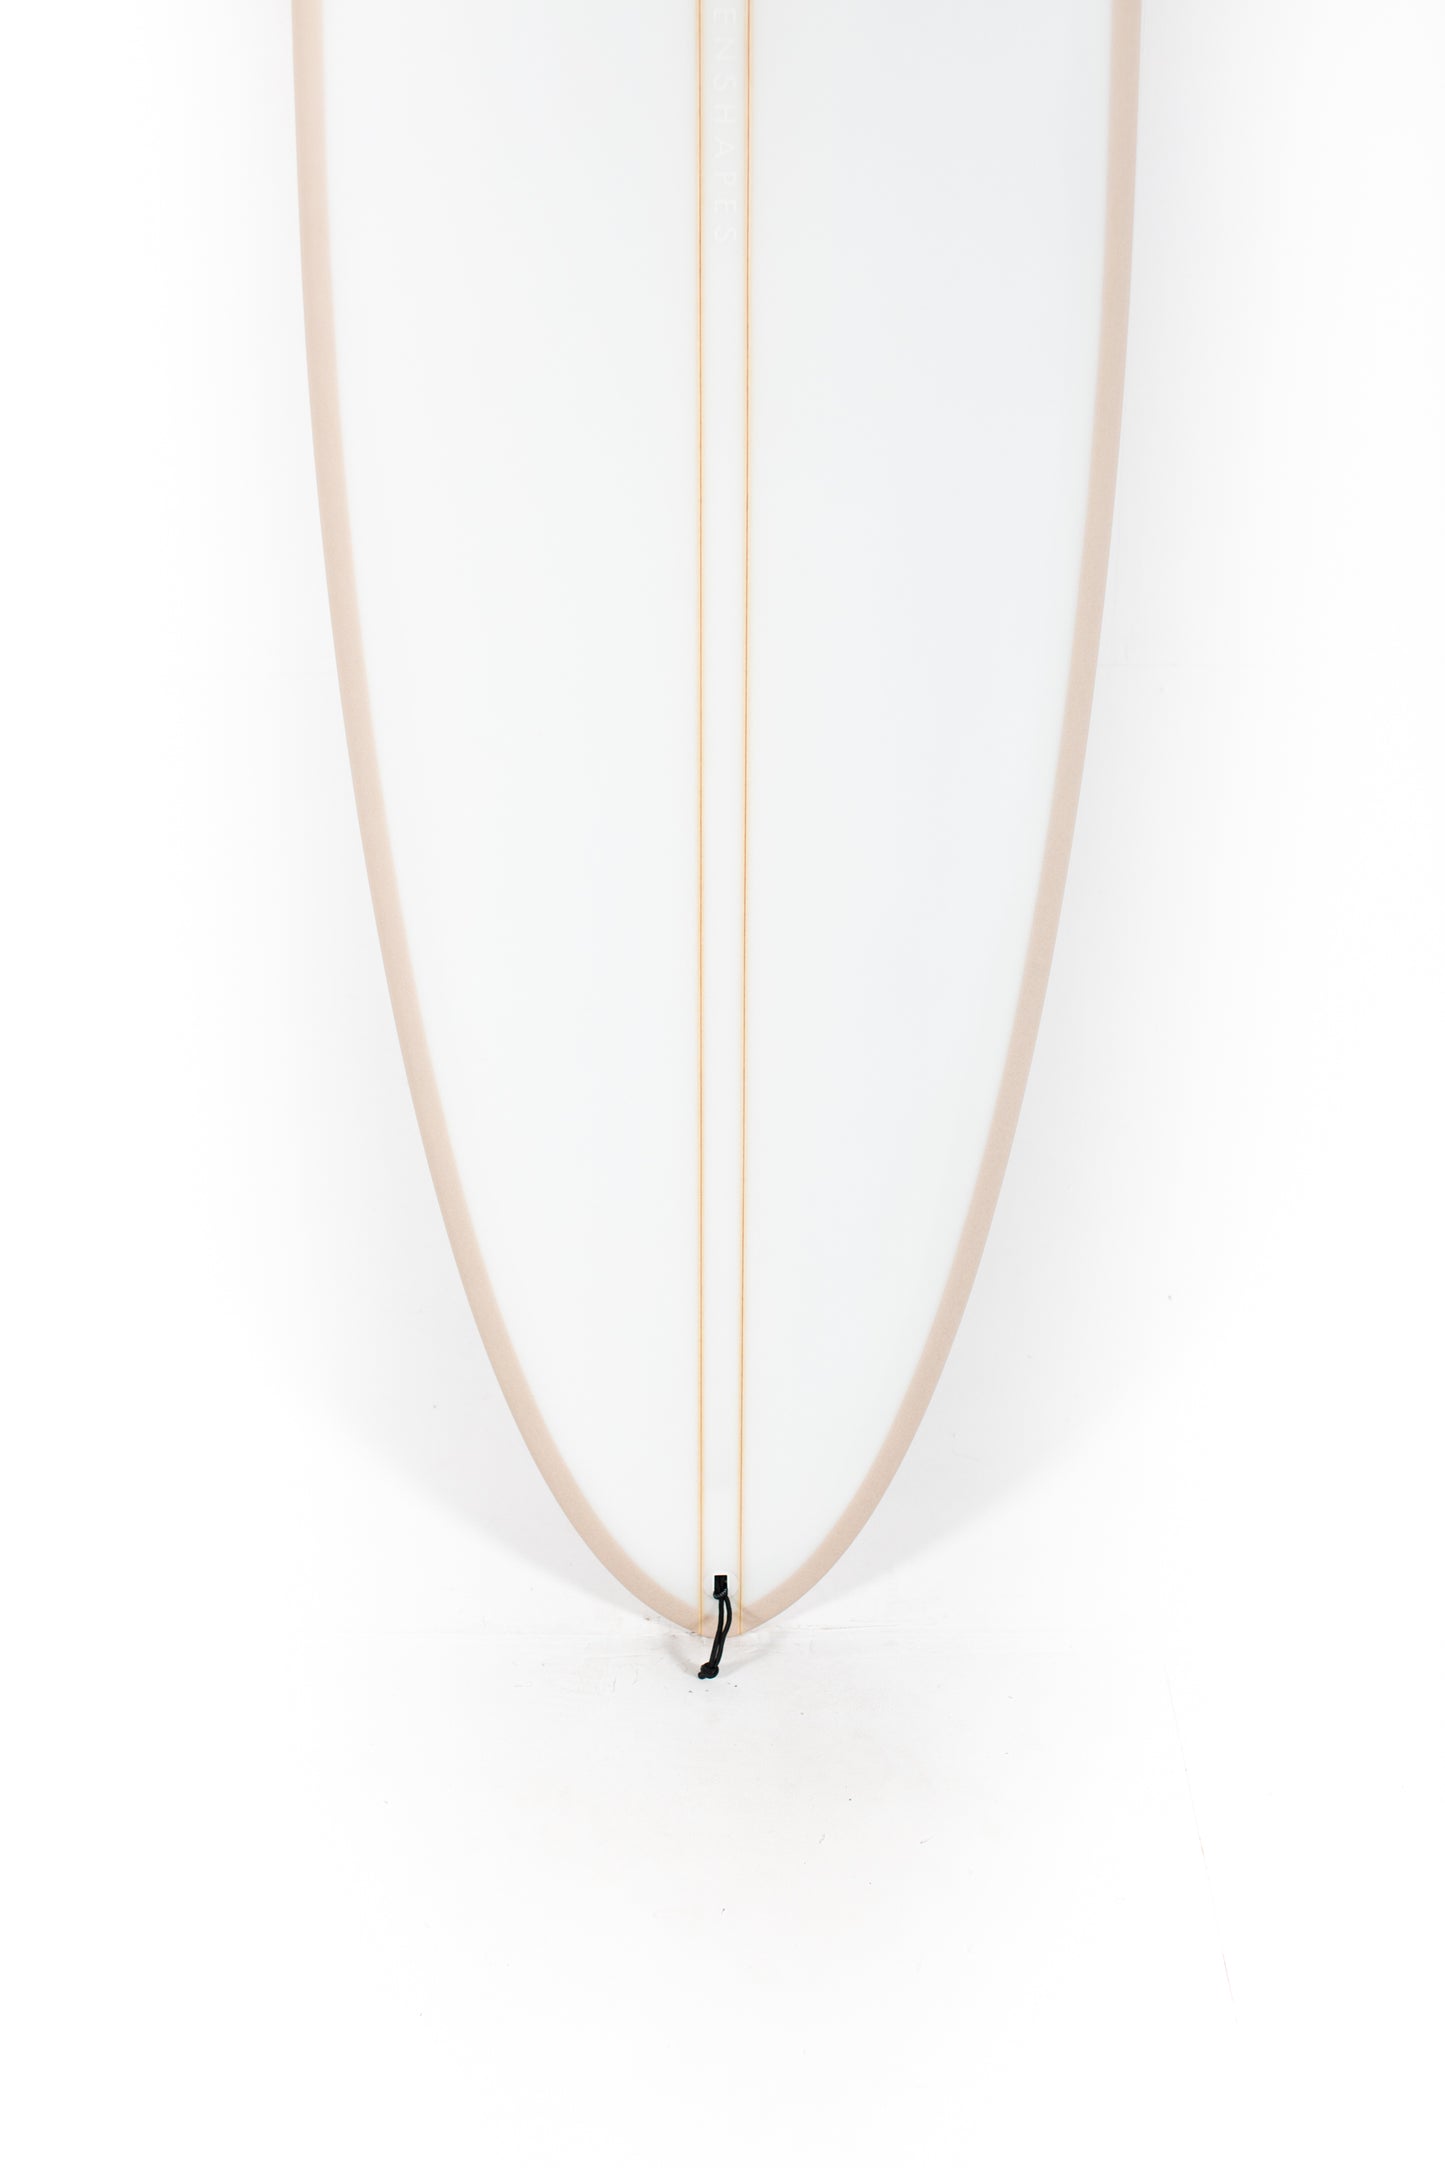 
                  
                    Pukas Surf Shop - HaydenShapes Surfboard - MID LENGTH GLIDER - DUST - 6'7" X 20 1/2" X 2 5/8" - 39.5L
                  
                